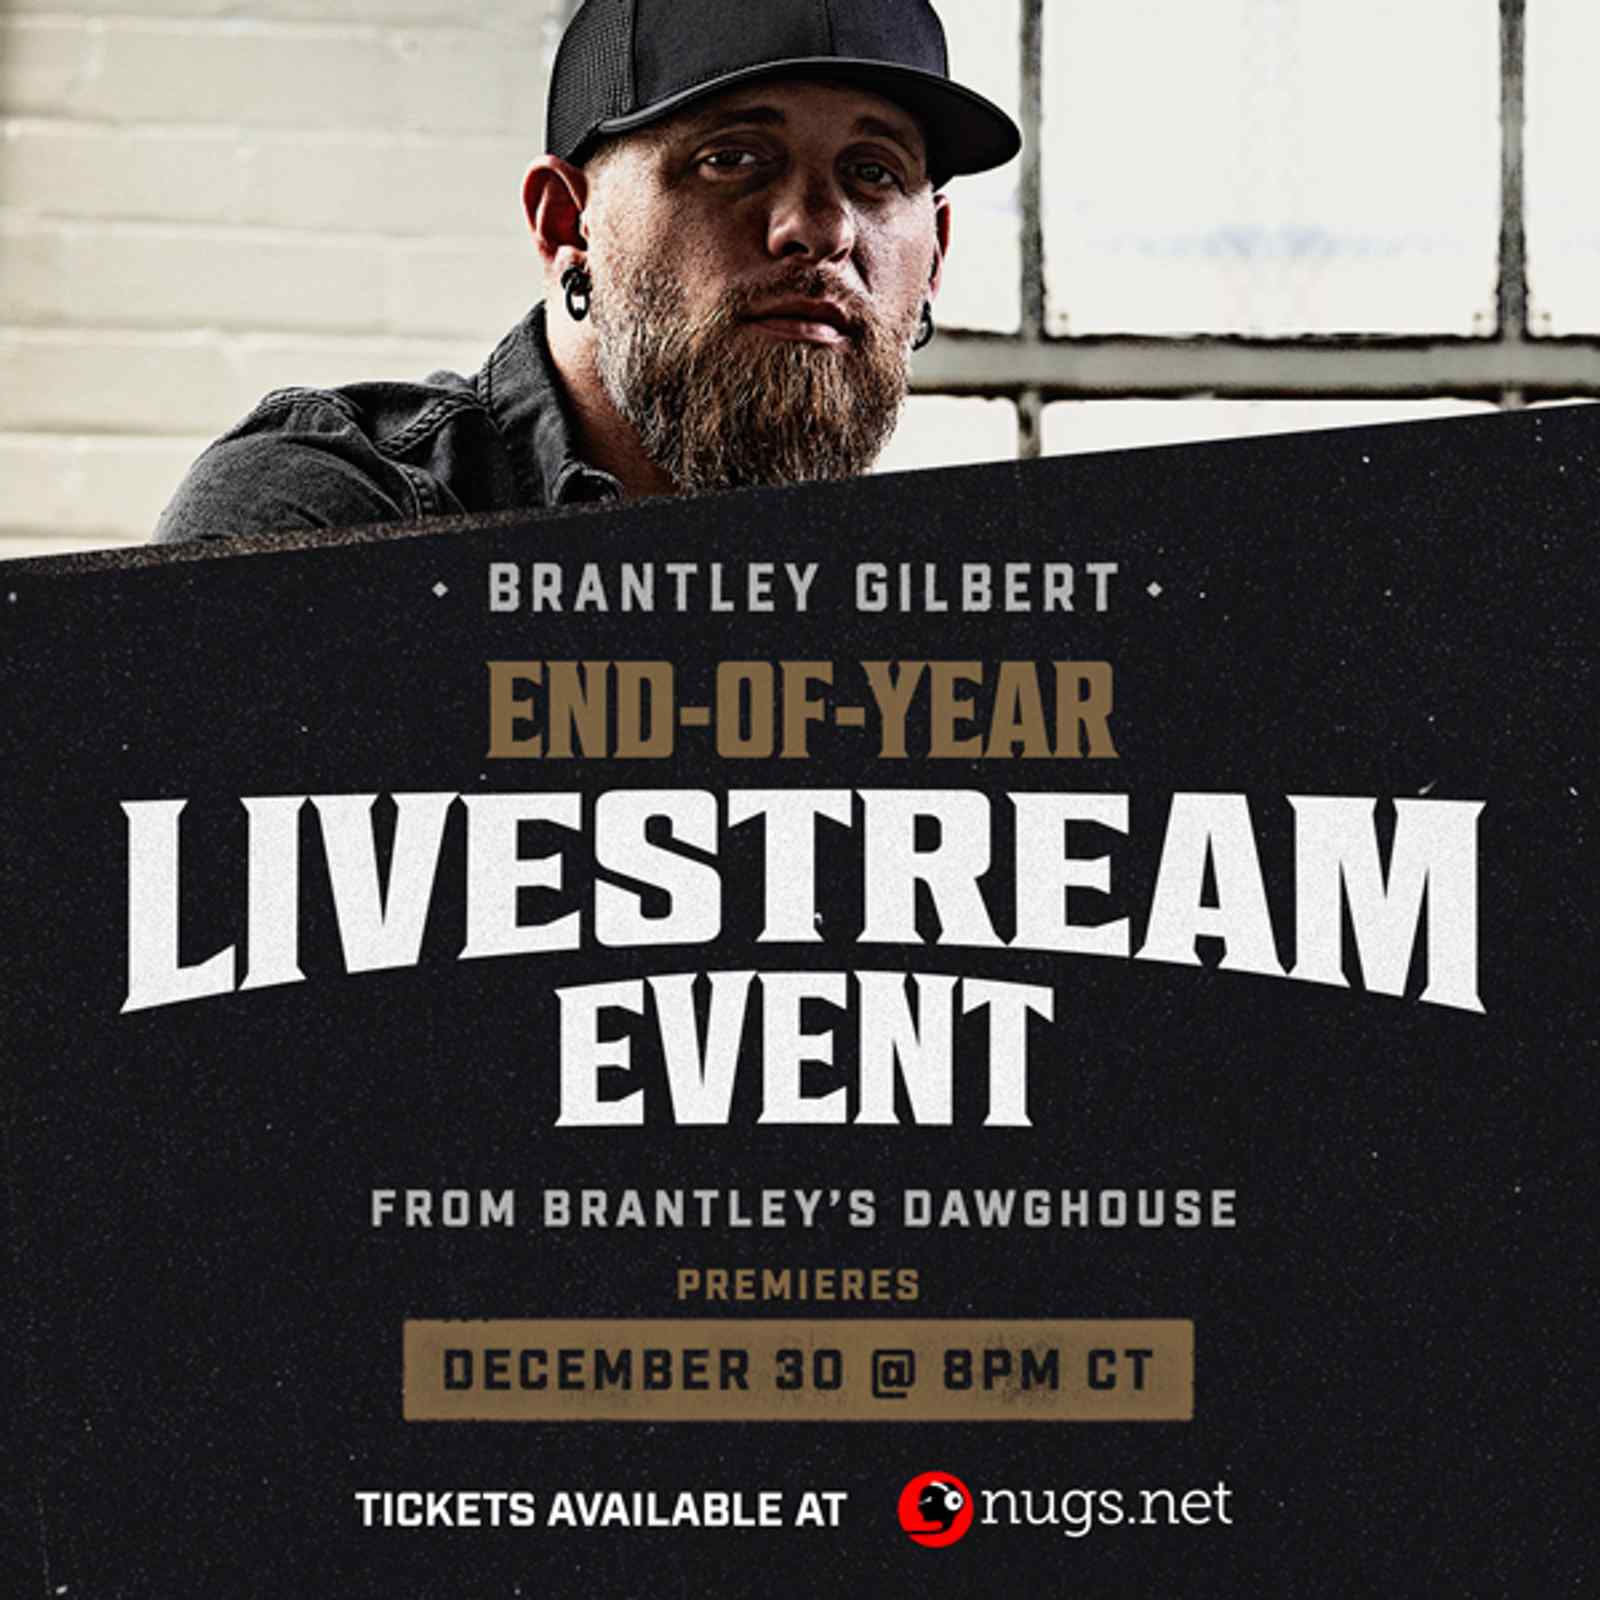 Brantley Gilbert End-Of-Year Livestream Event